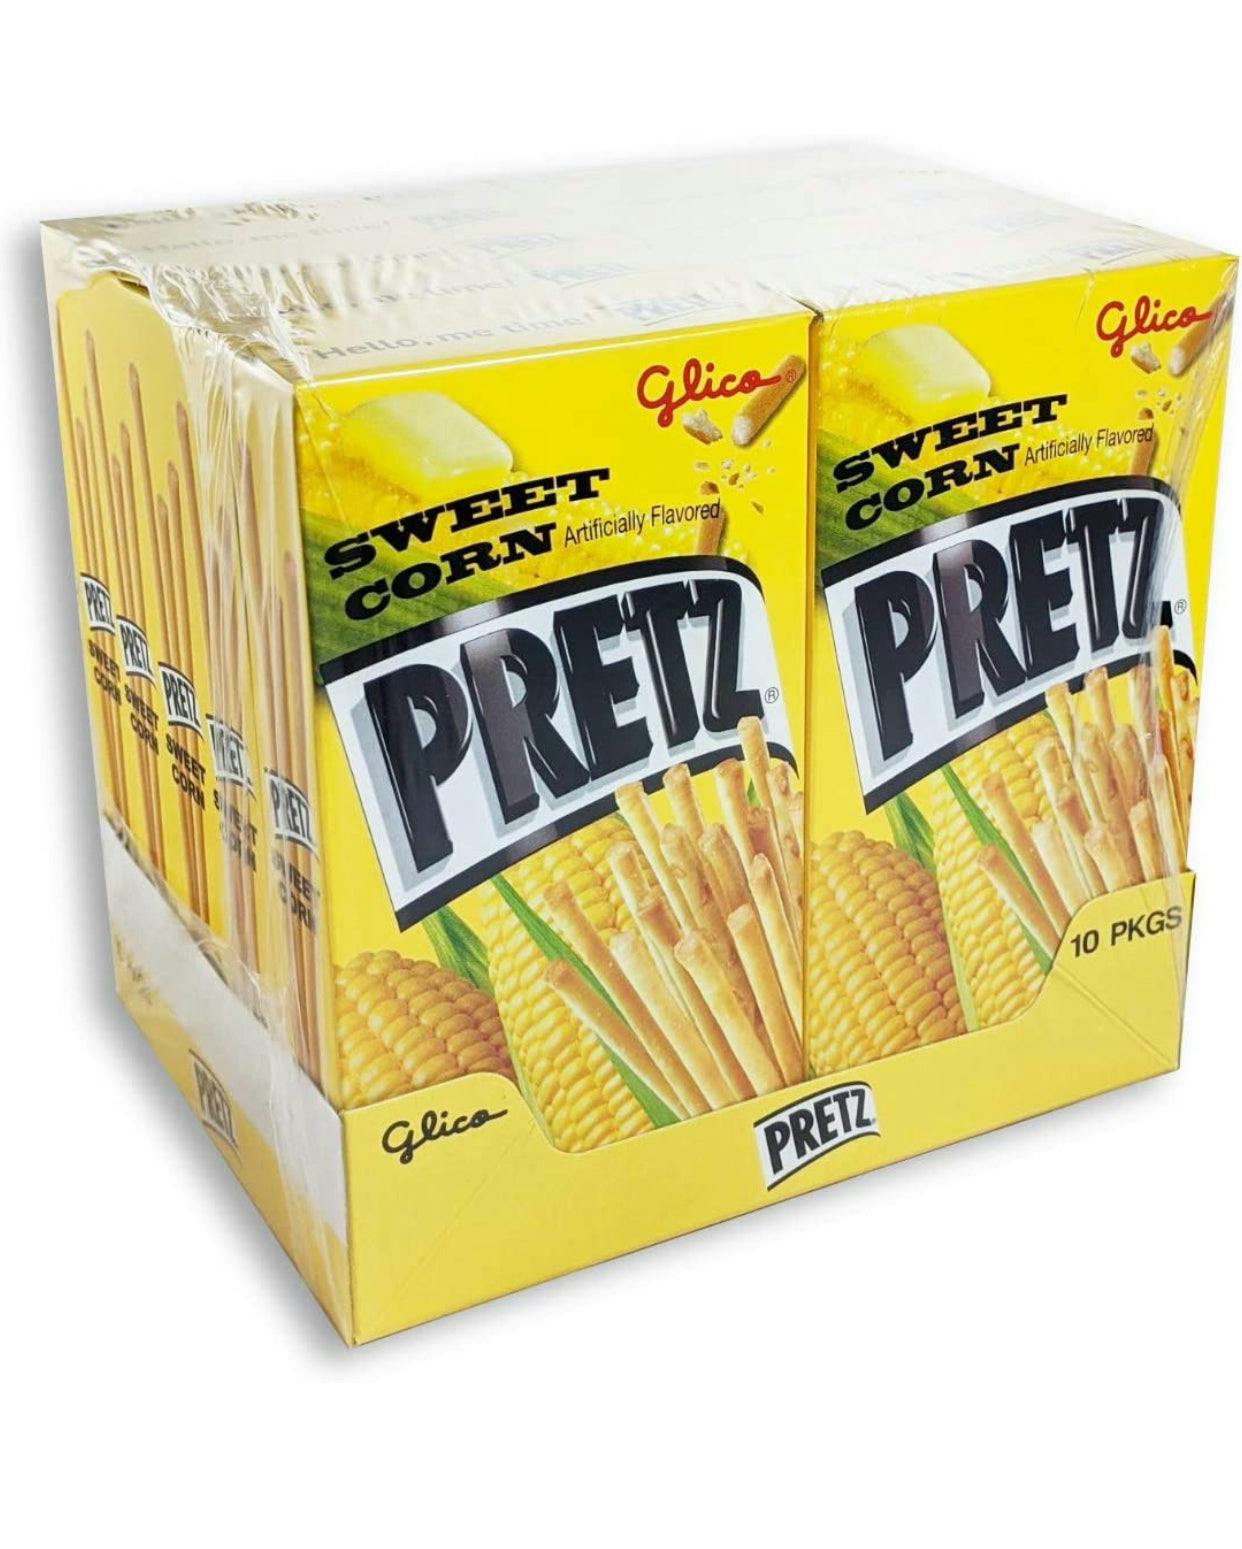 Glico Pretz Baked Snack Sticks, Sweet Corn Flavored